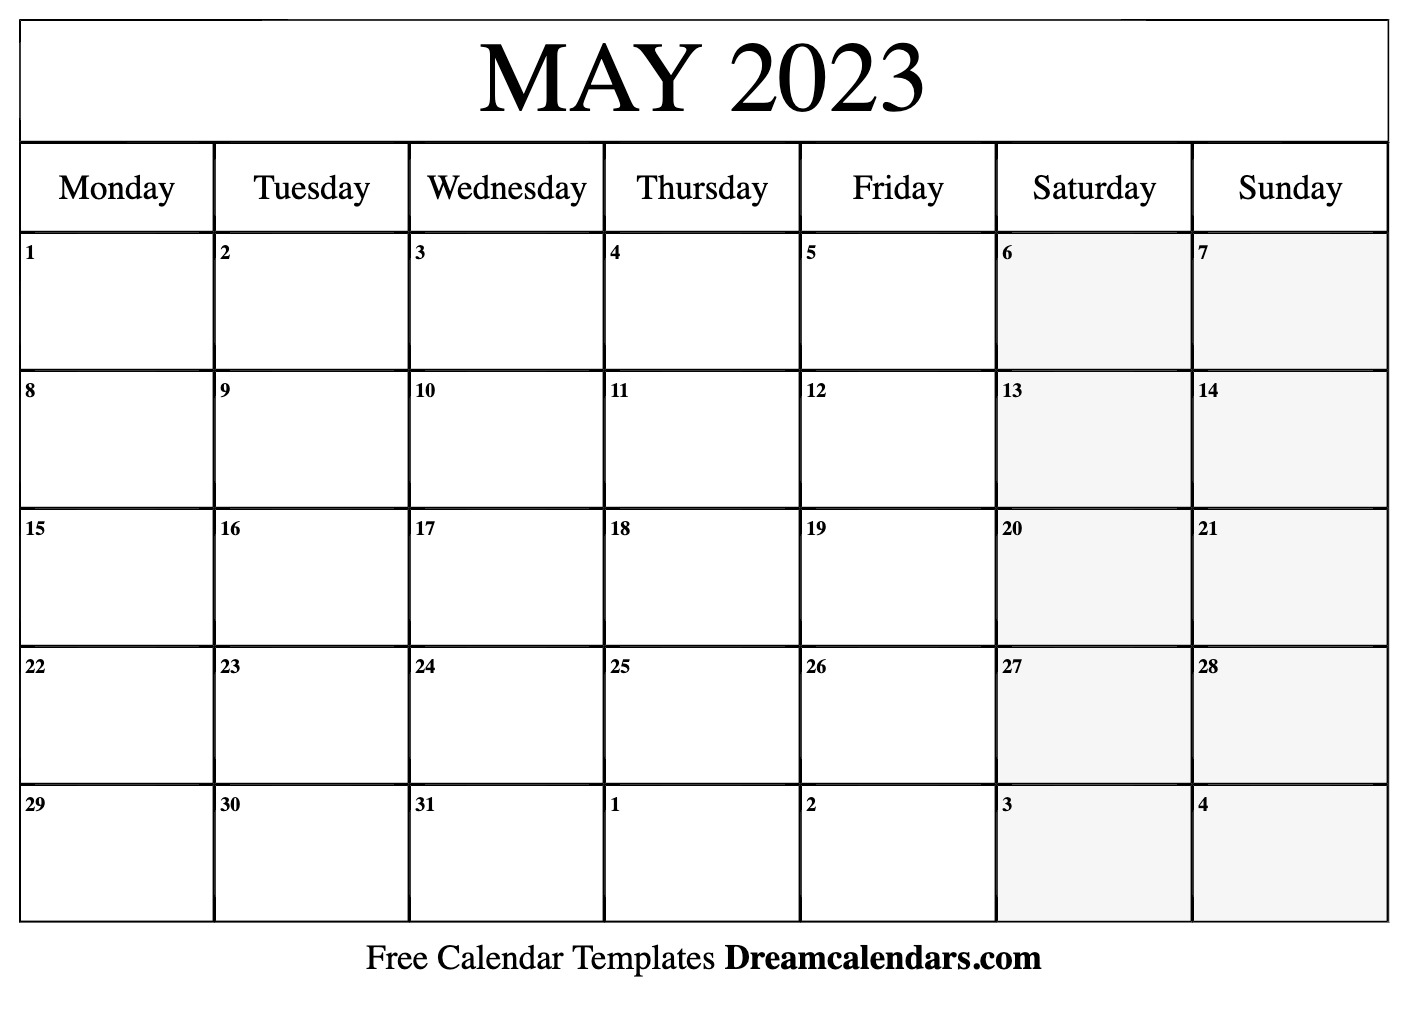 may 2023 calendar free printable calendar may 2023 calendar free